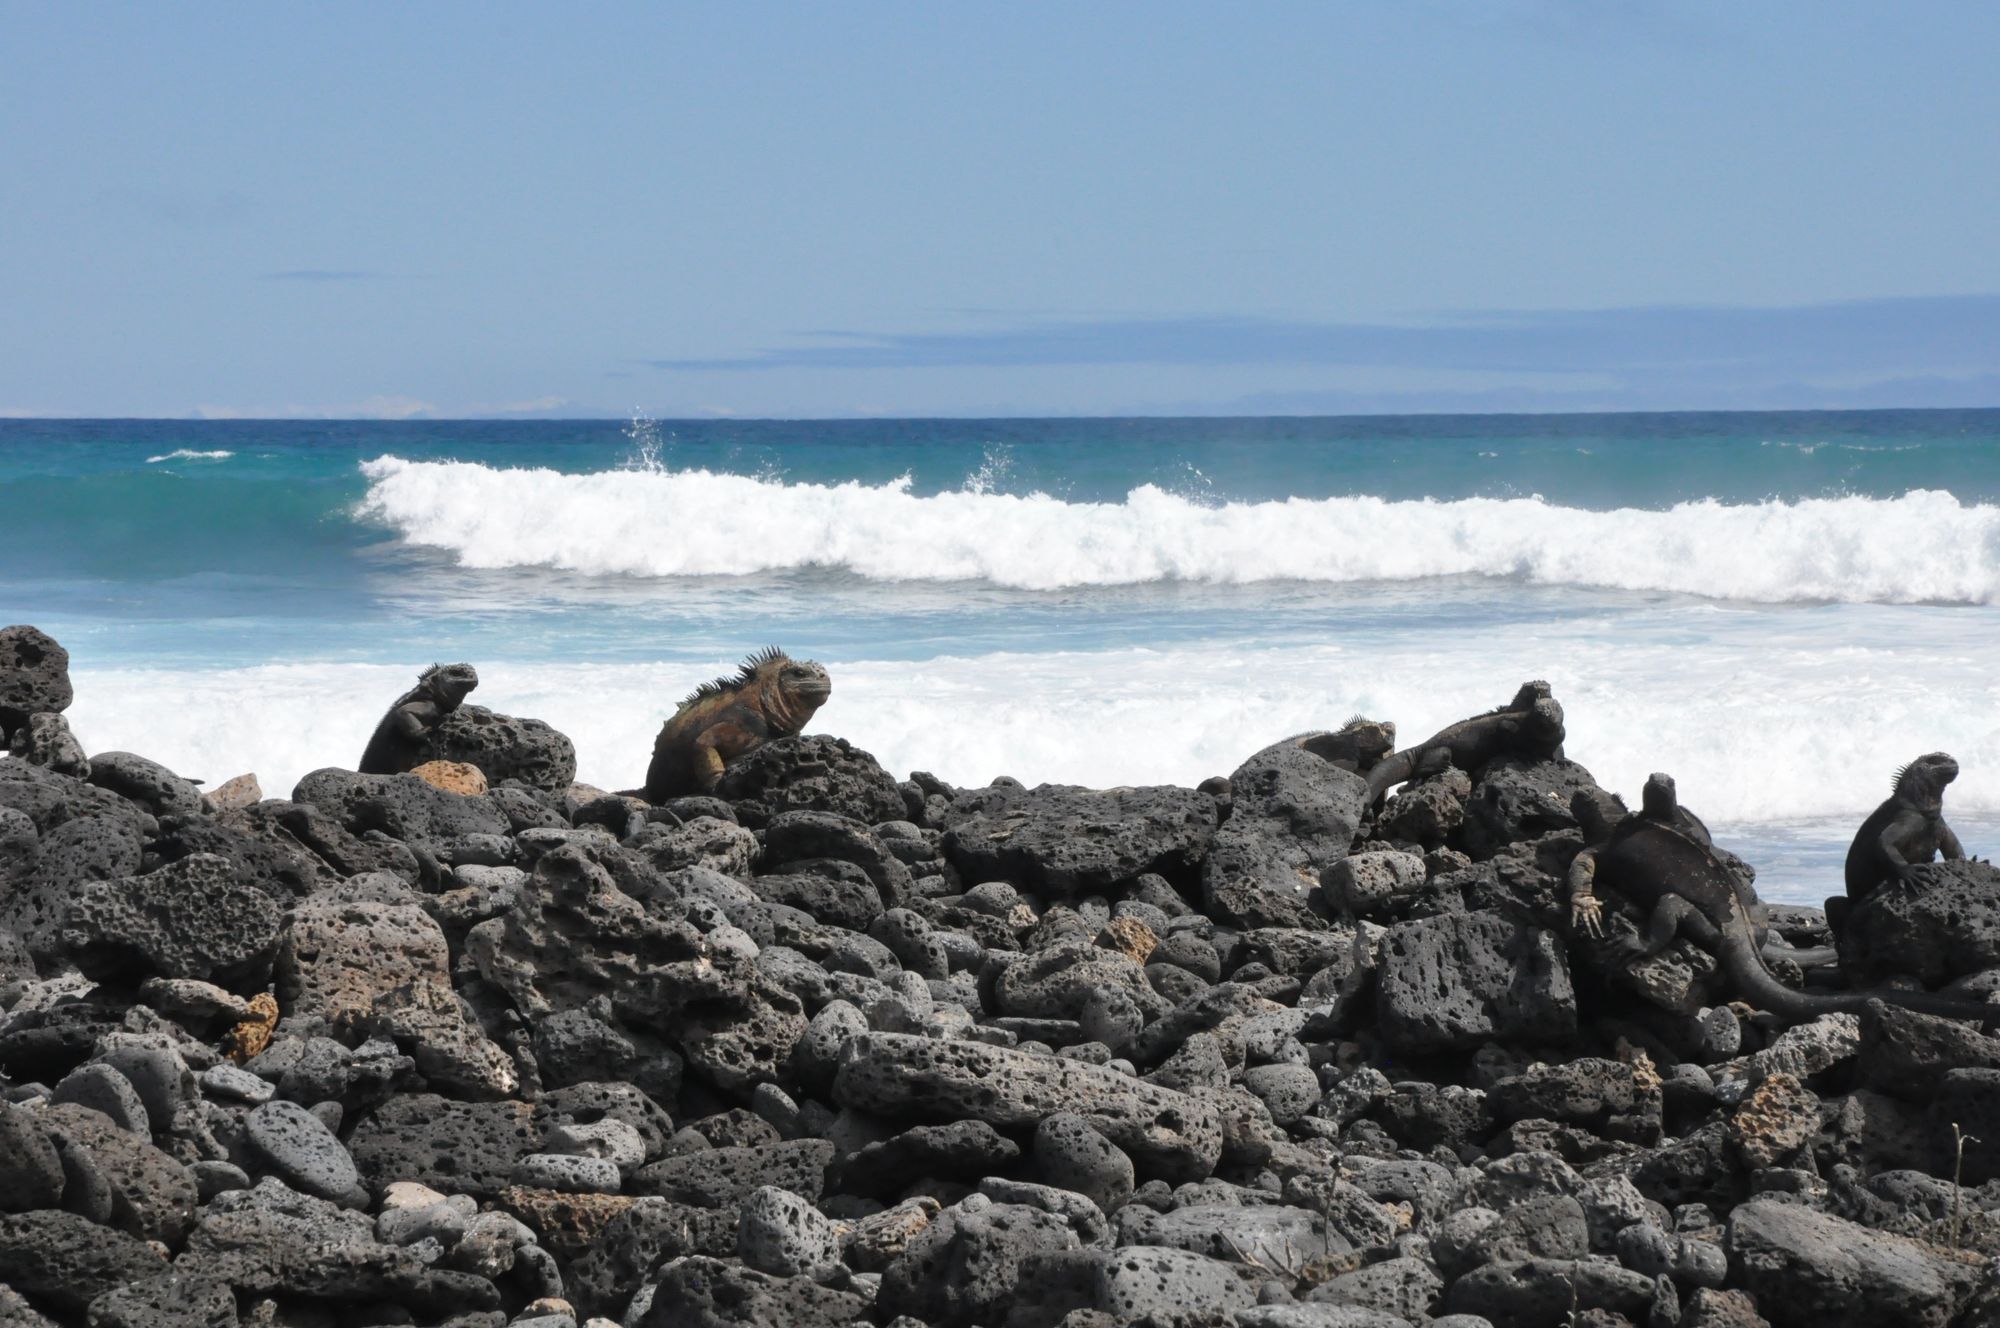 Iguanas sunning near a surf spot on Isabela Island